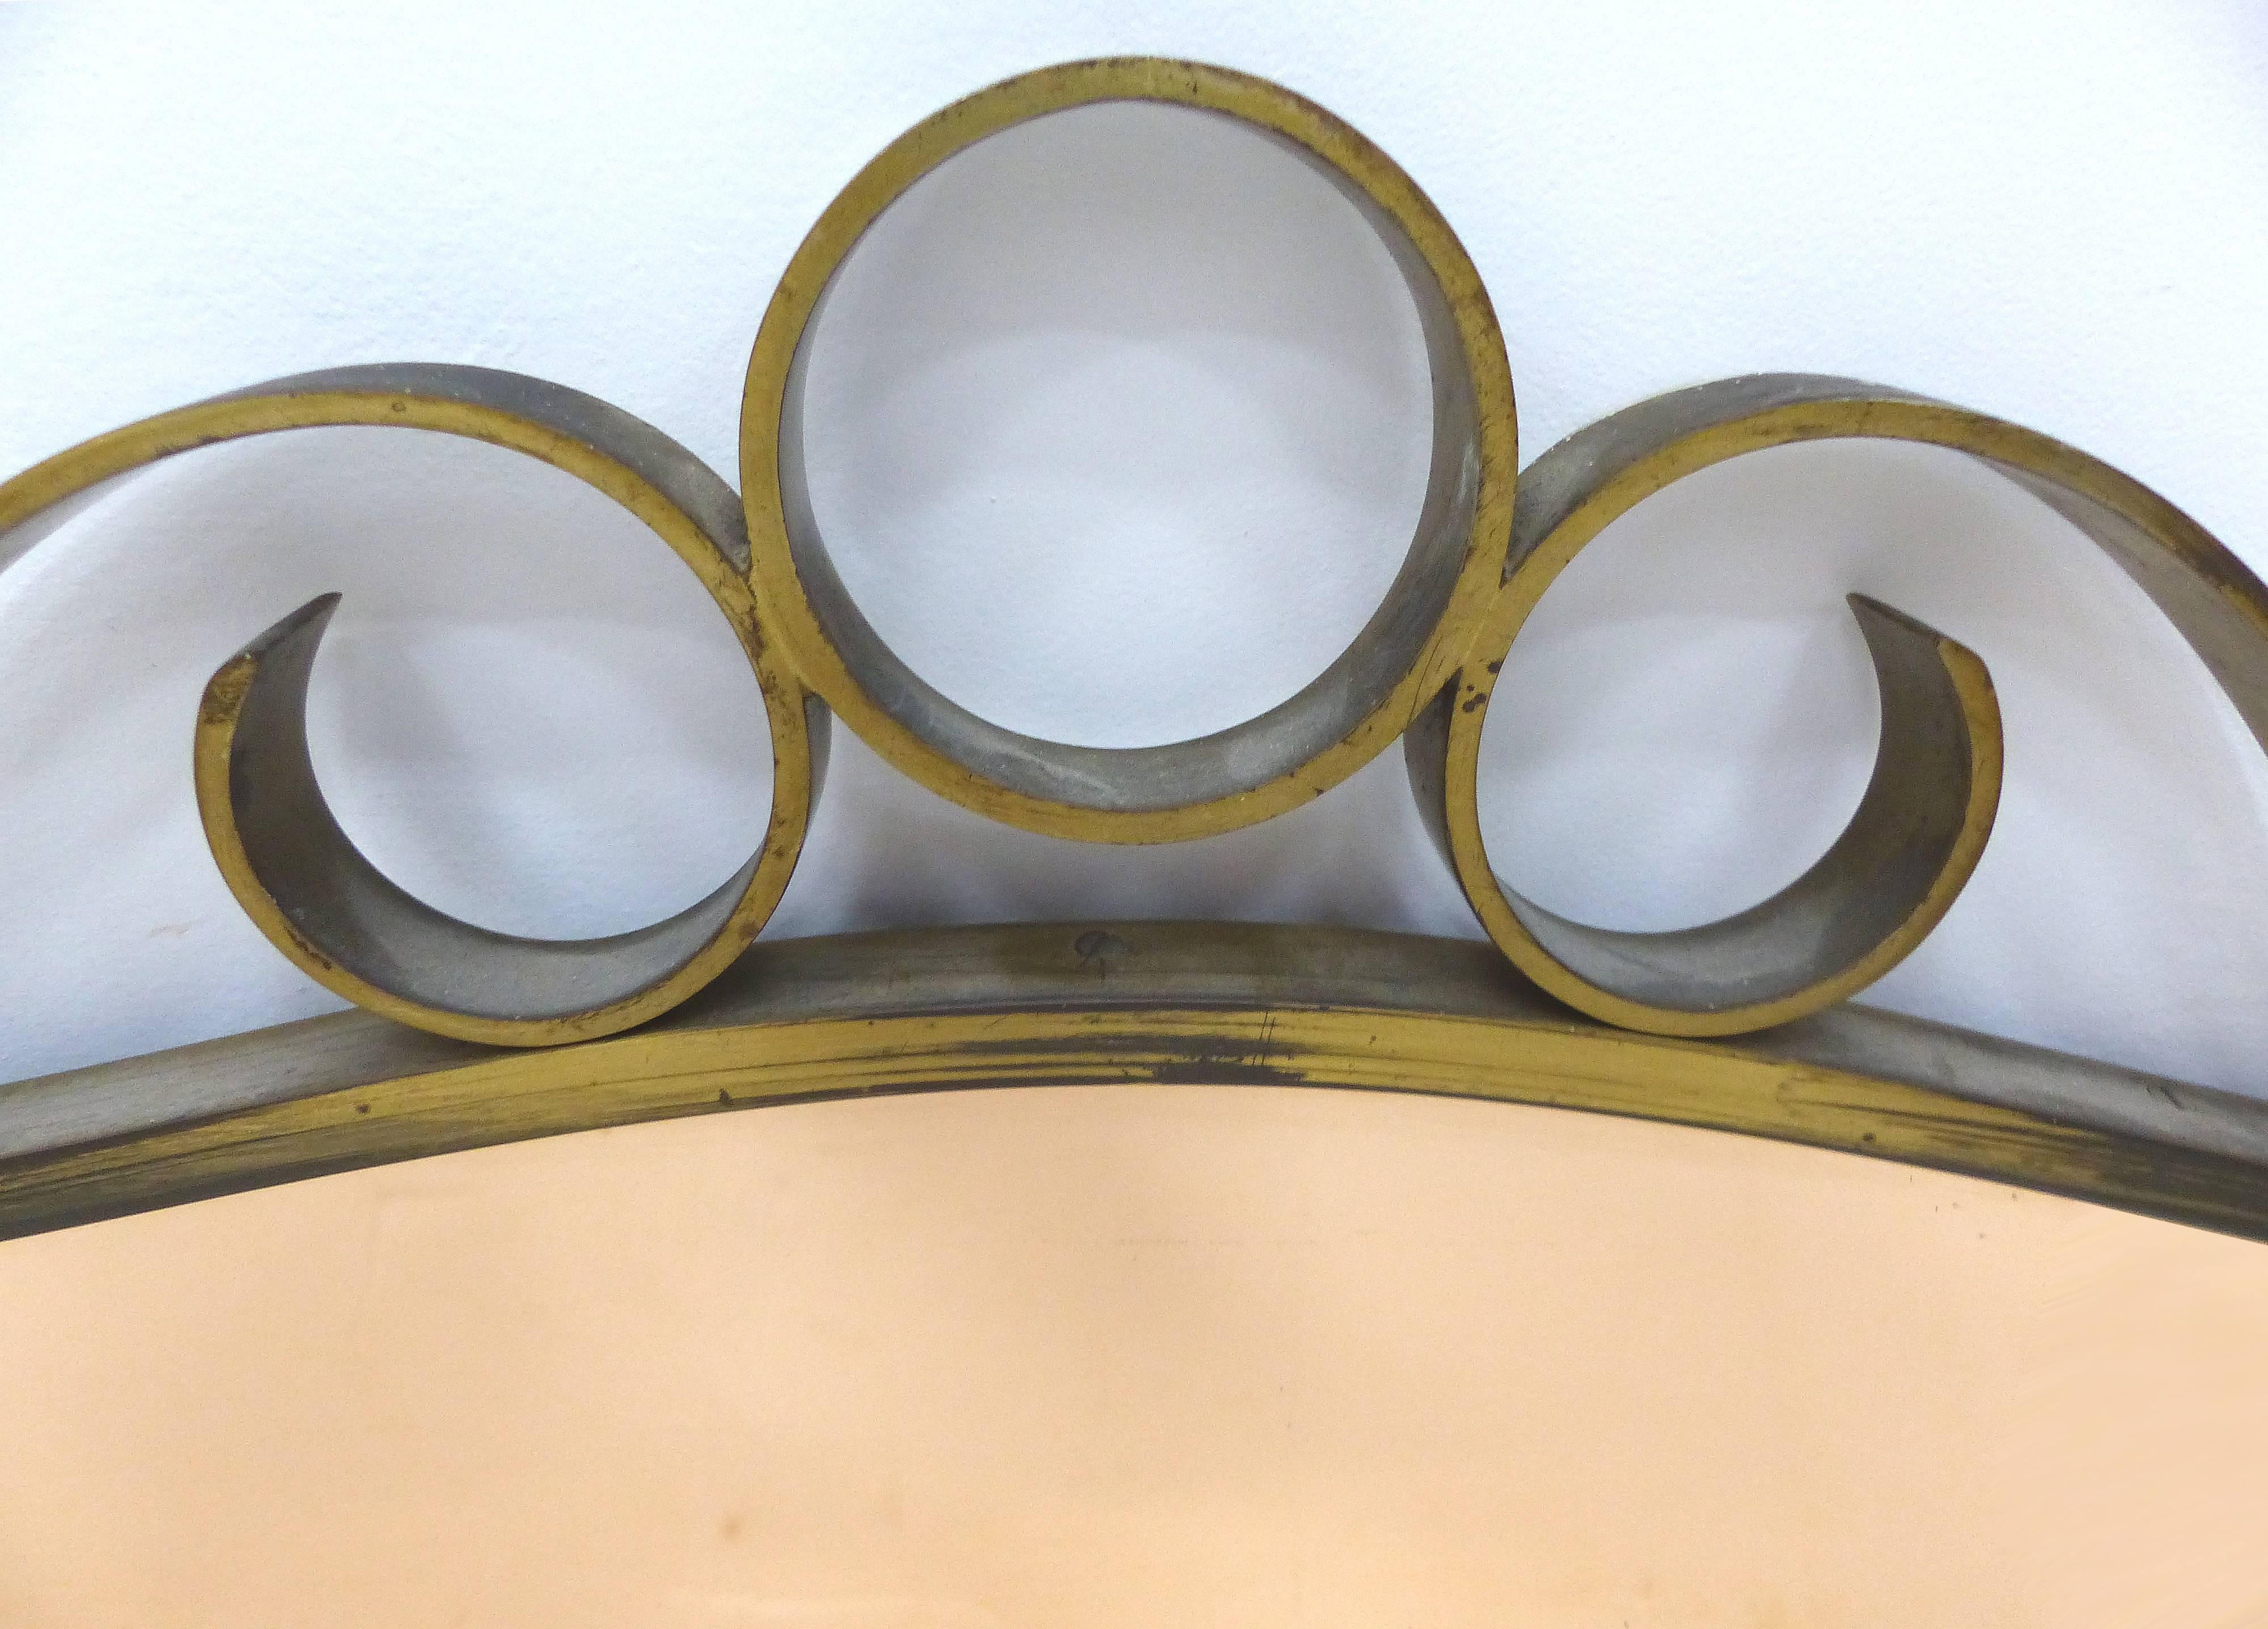 Art Deco Brass Peach Glass Wall Mirror

A gently curved brass Art Deco wall mirror with the original peach glass mirror. The brass has achieved a bronze-tone patina.
  
 